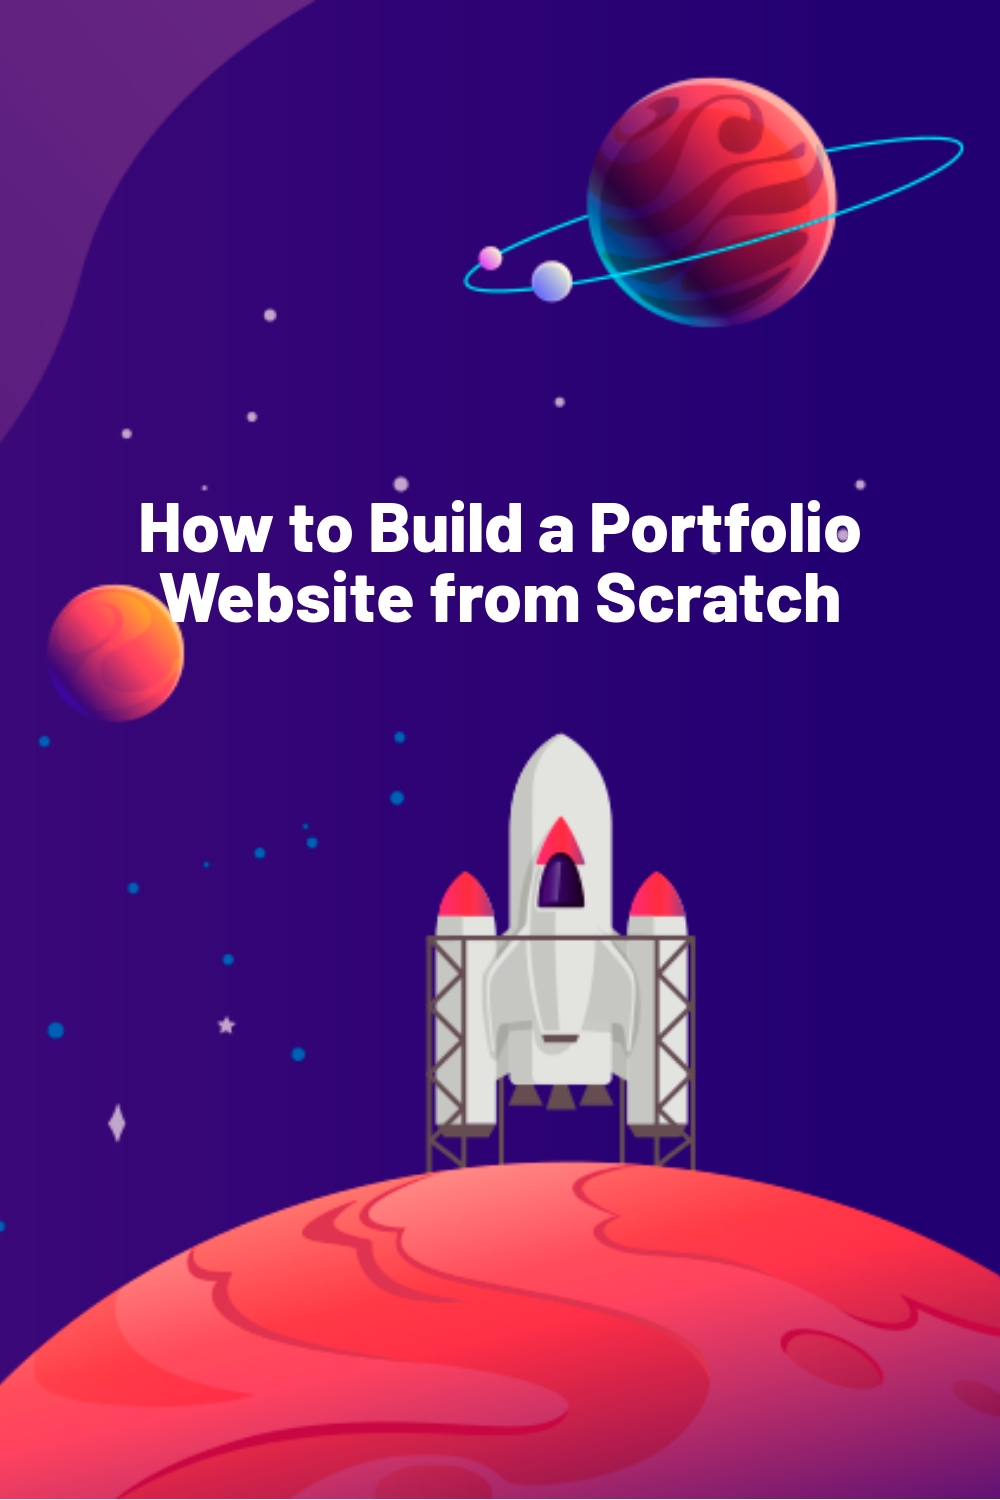 How to Build a Portfolio Website from Scratch